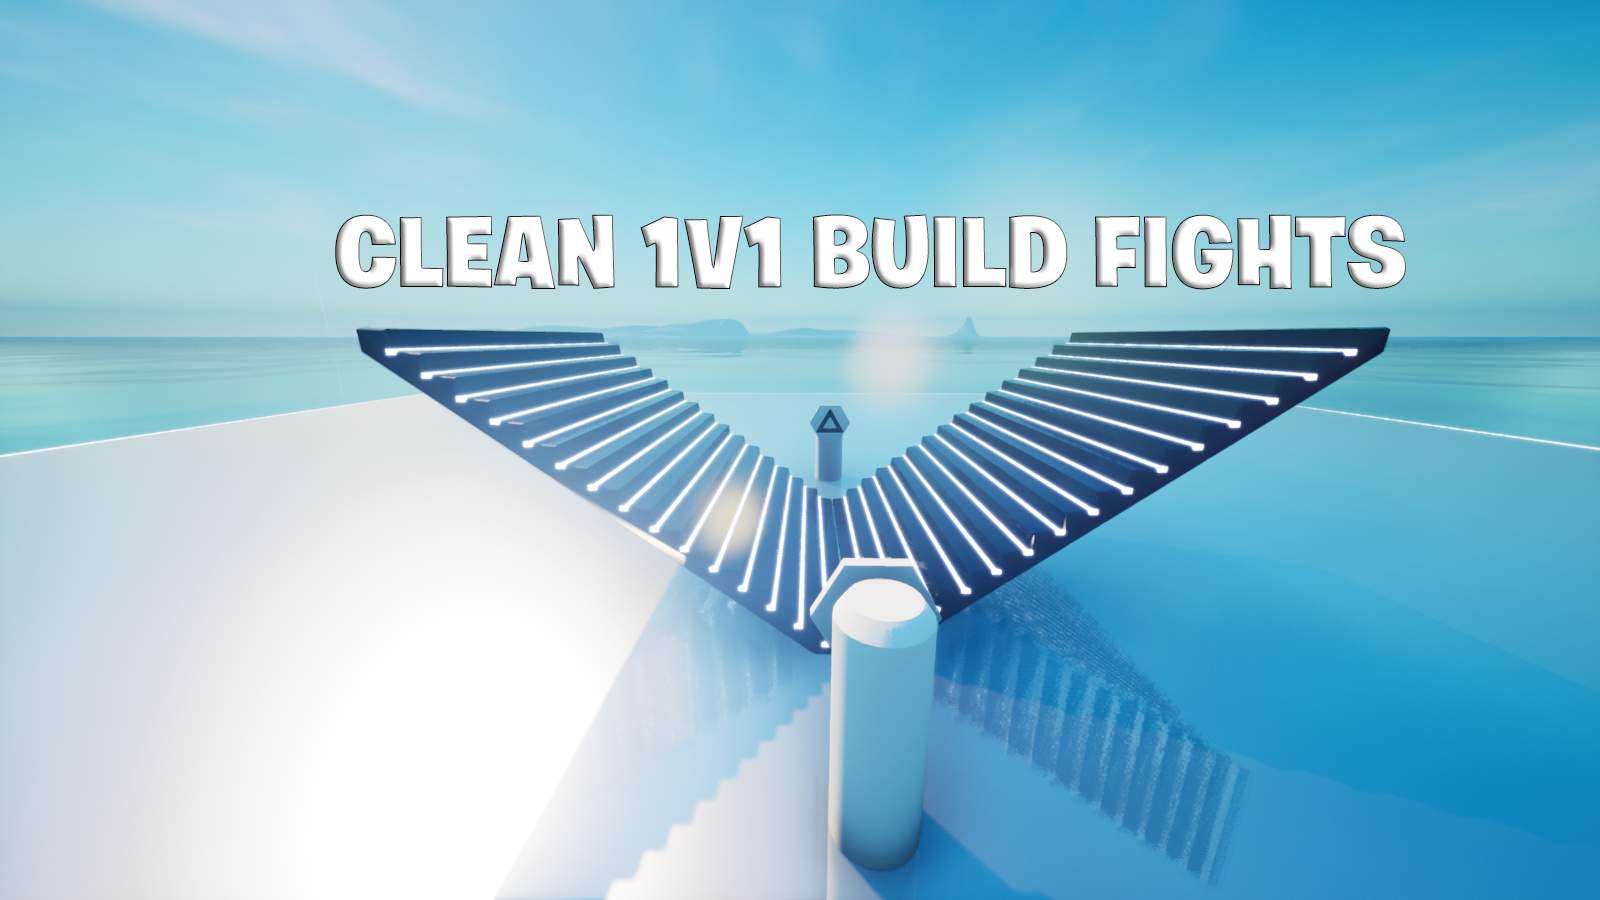 CLEAN 1V1 BUILD FIGHTS